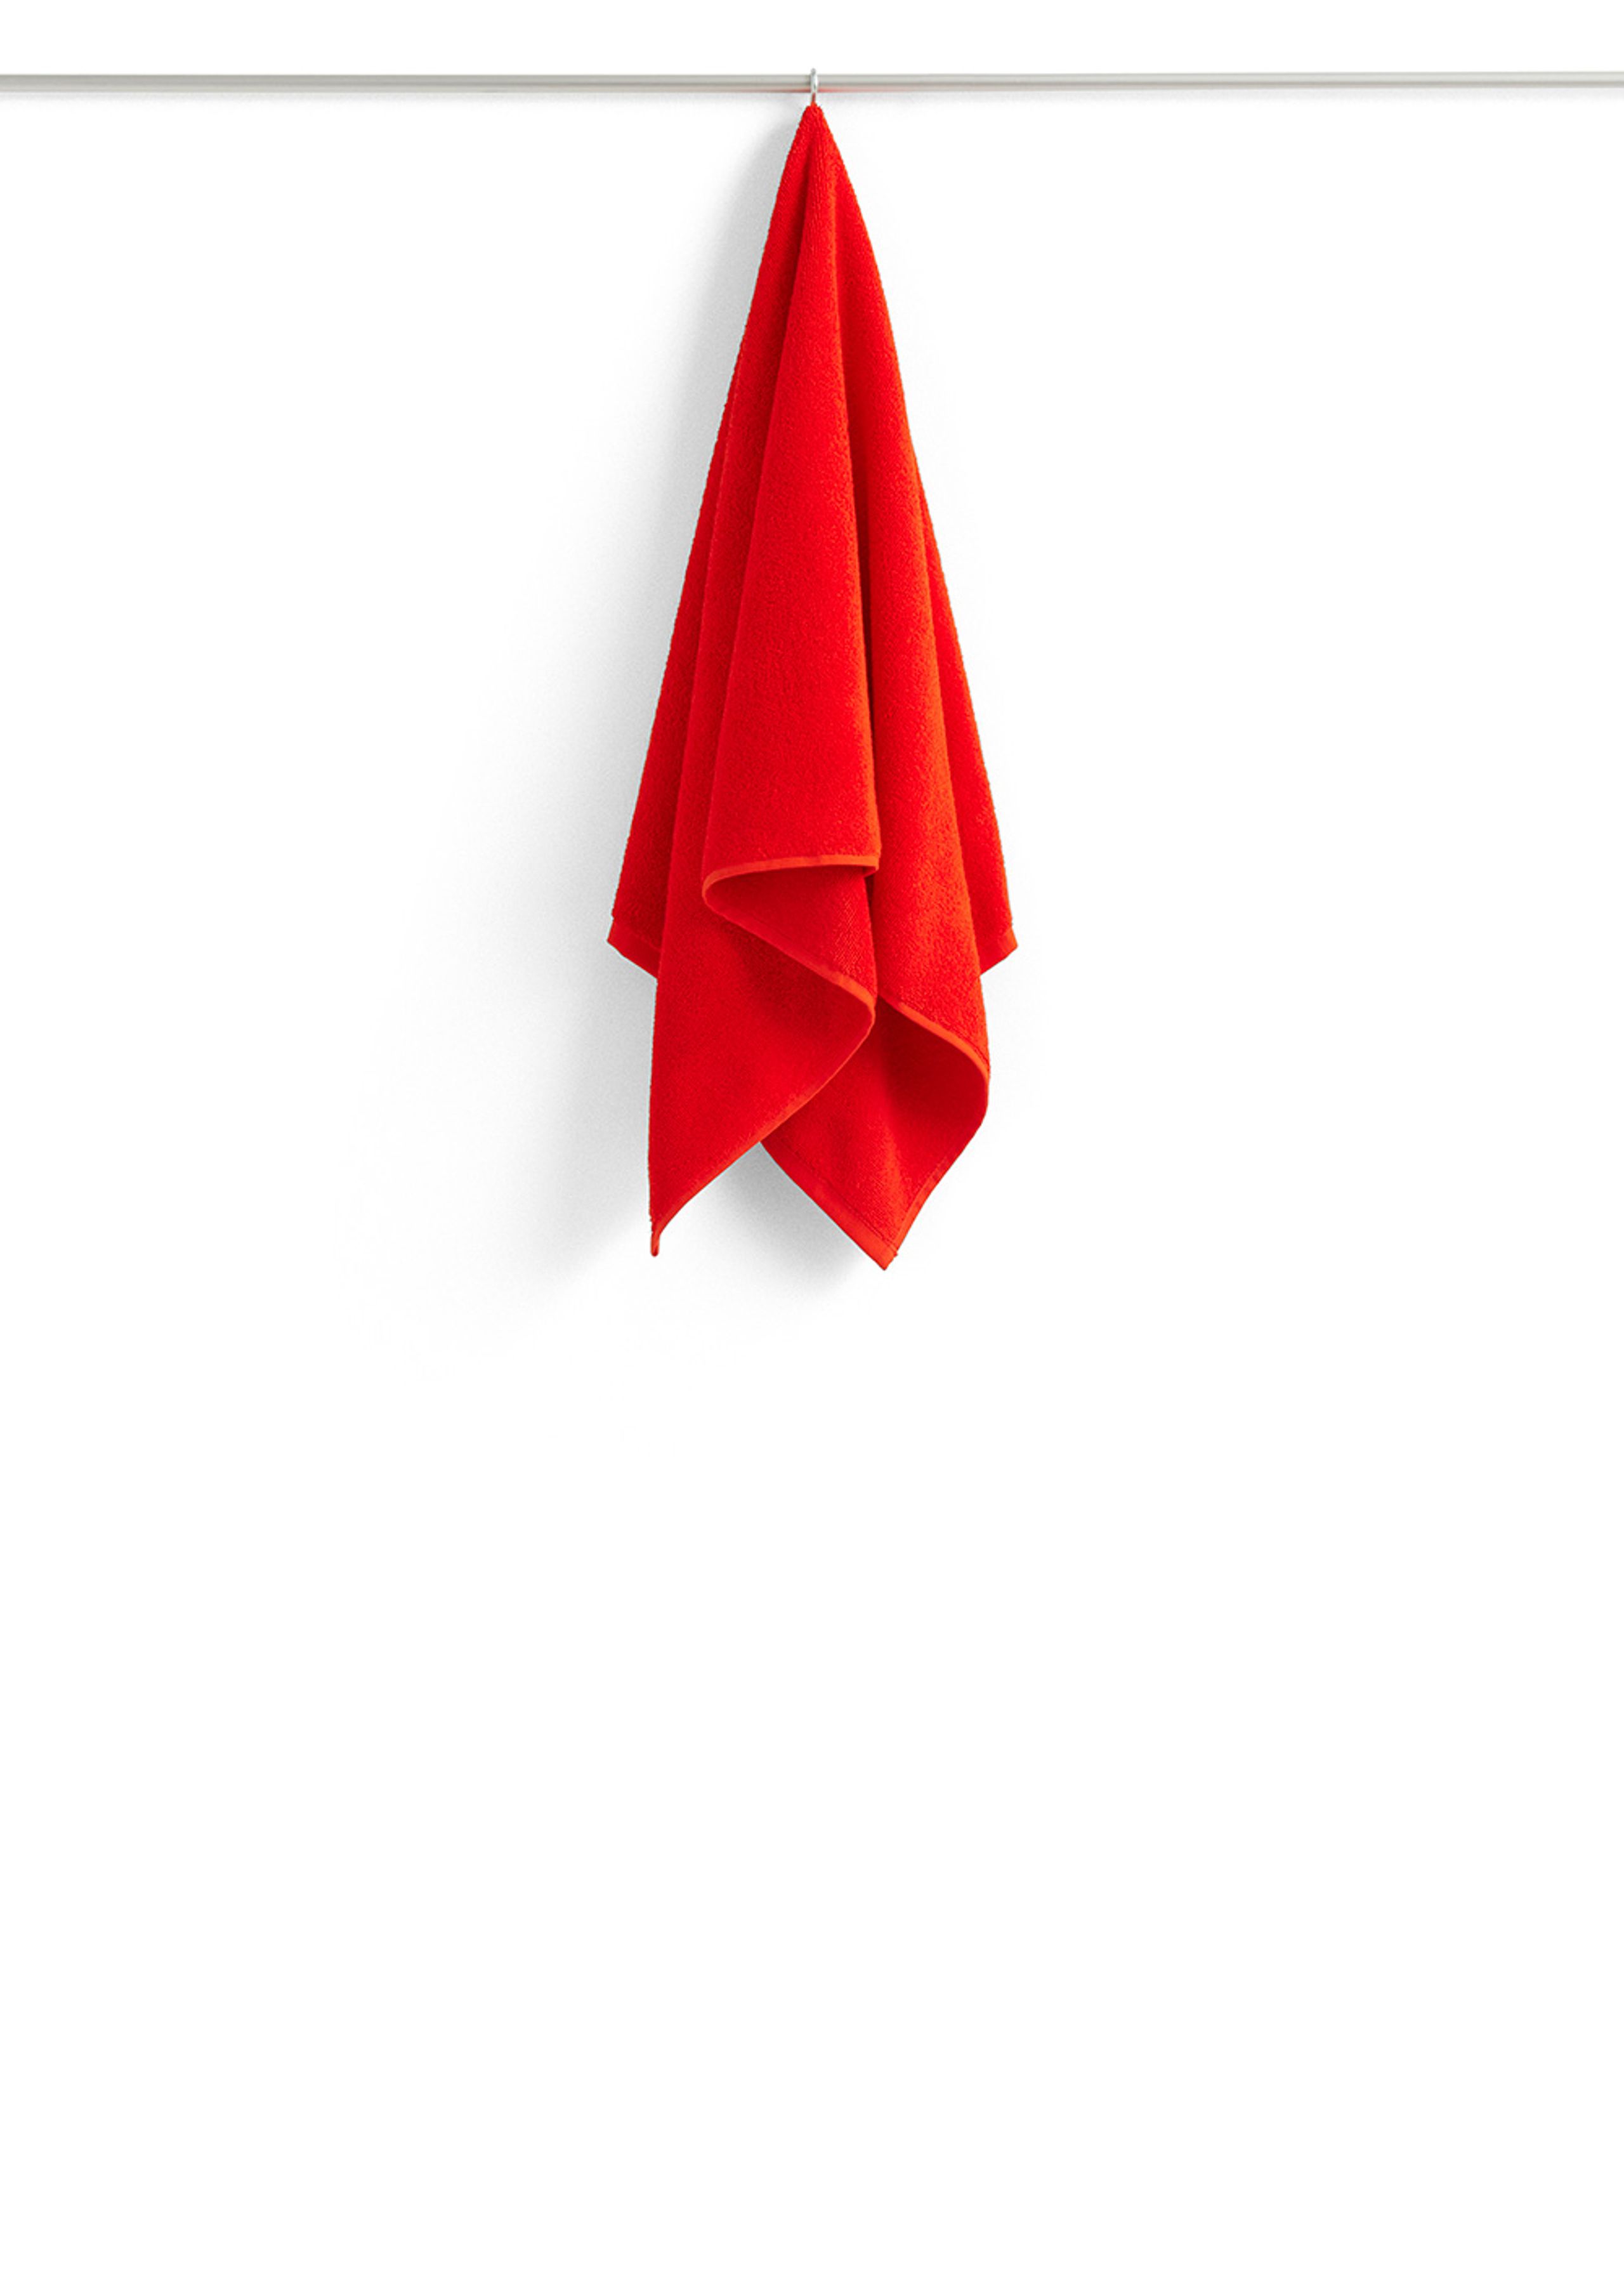 HAY - Handtuch - Mono Hand Towel - Poppy Red